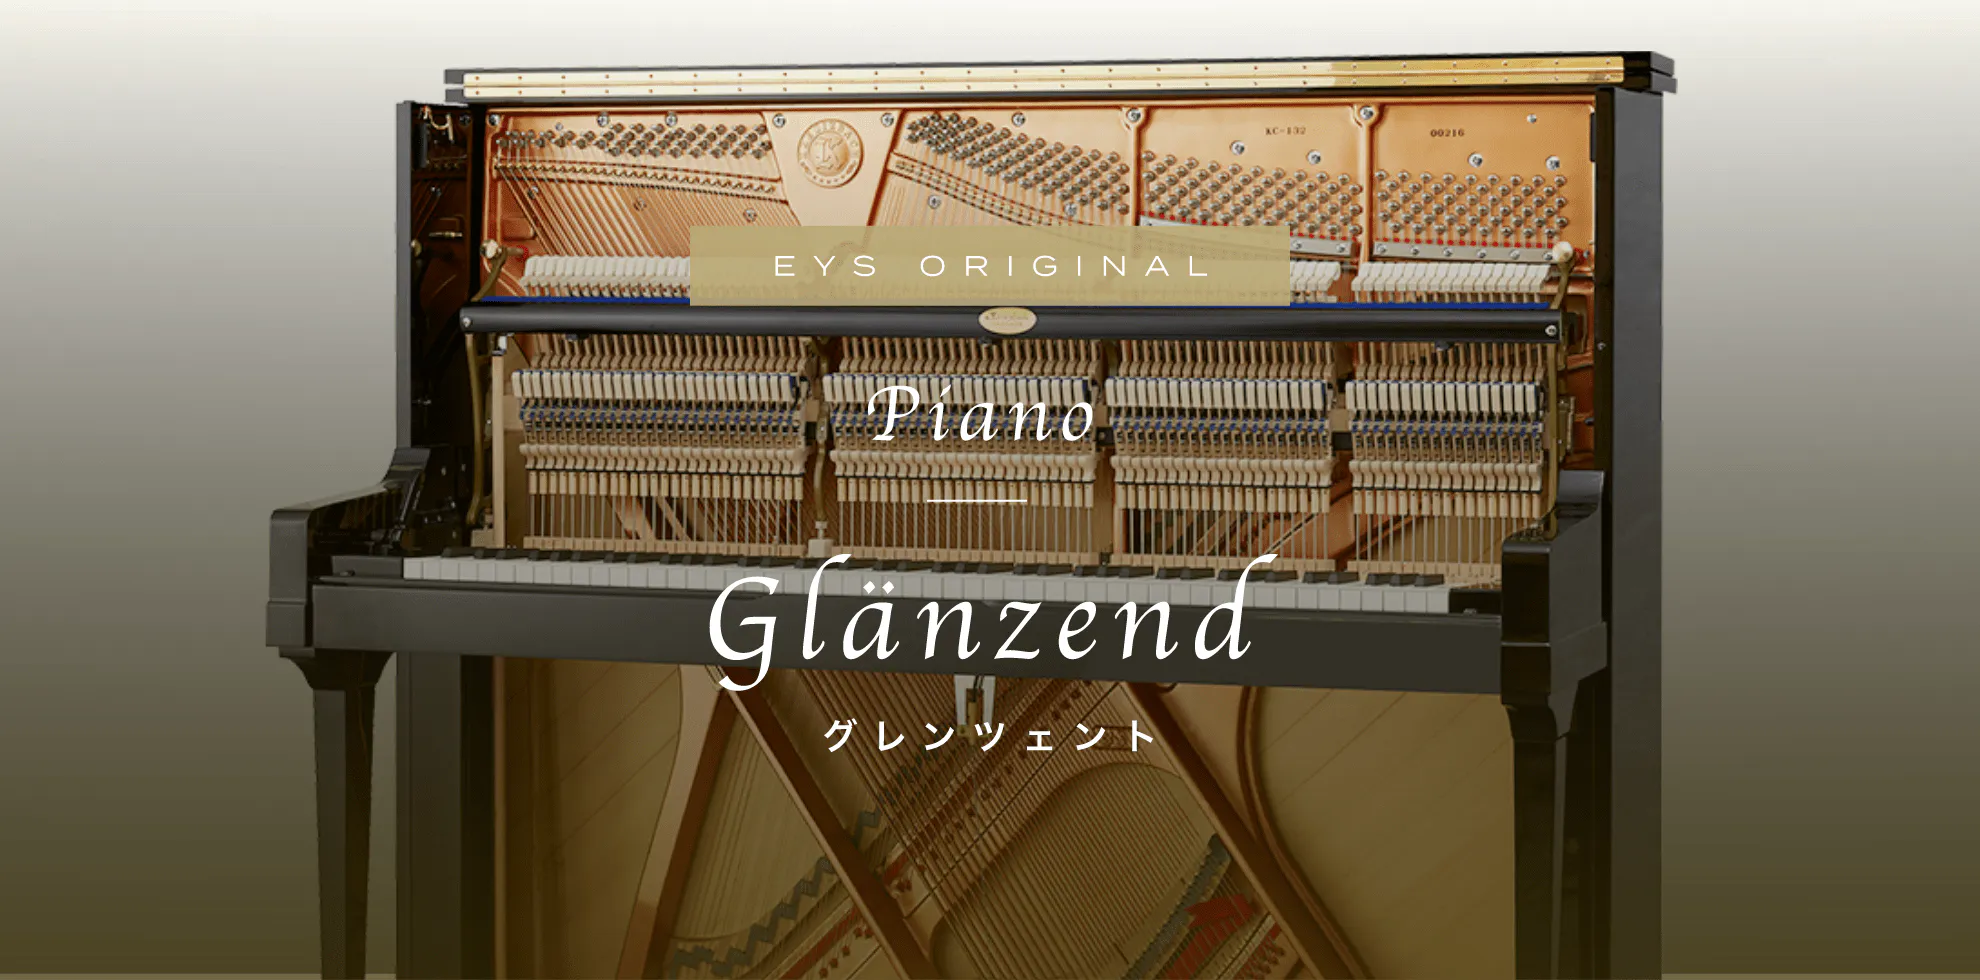 EYS ORIGINAL Piano Glanzend グレンツェント